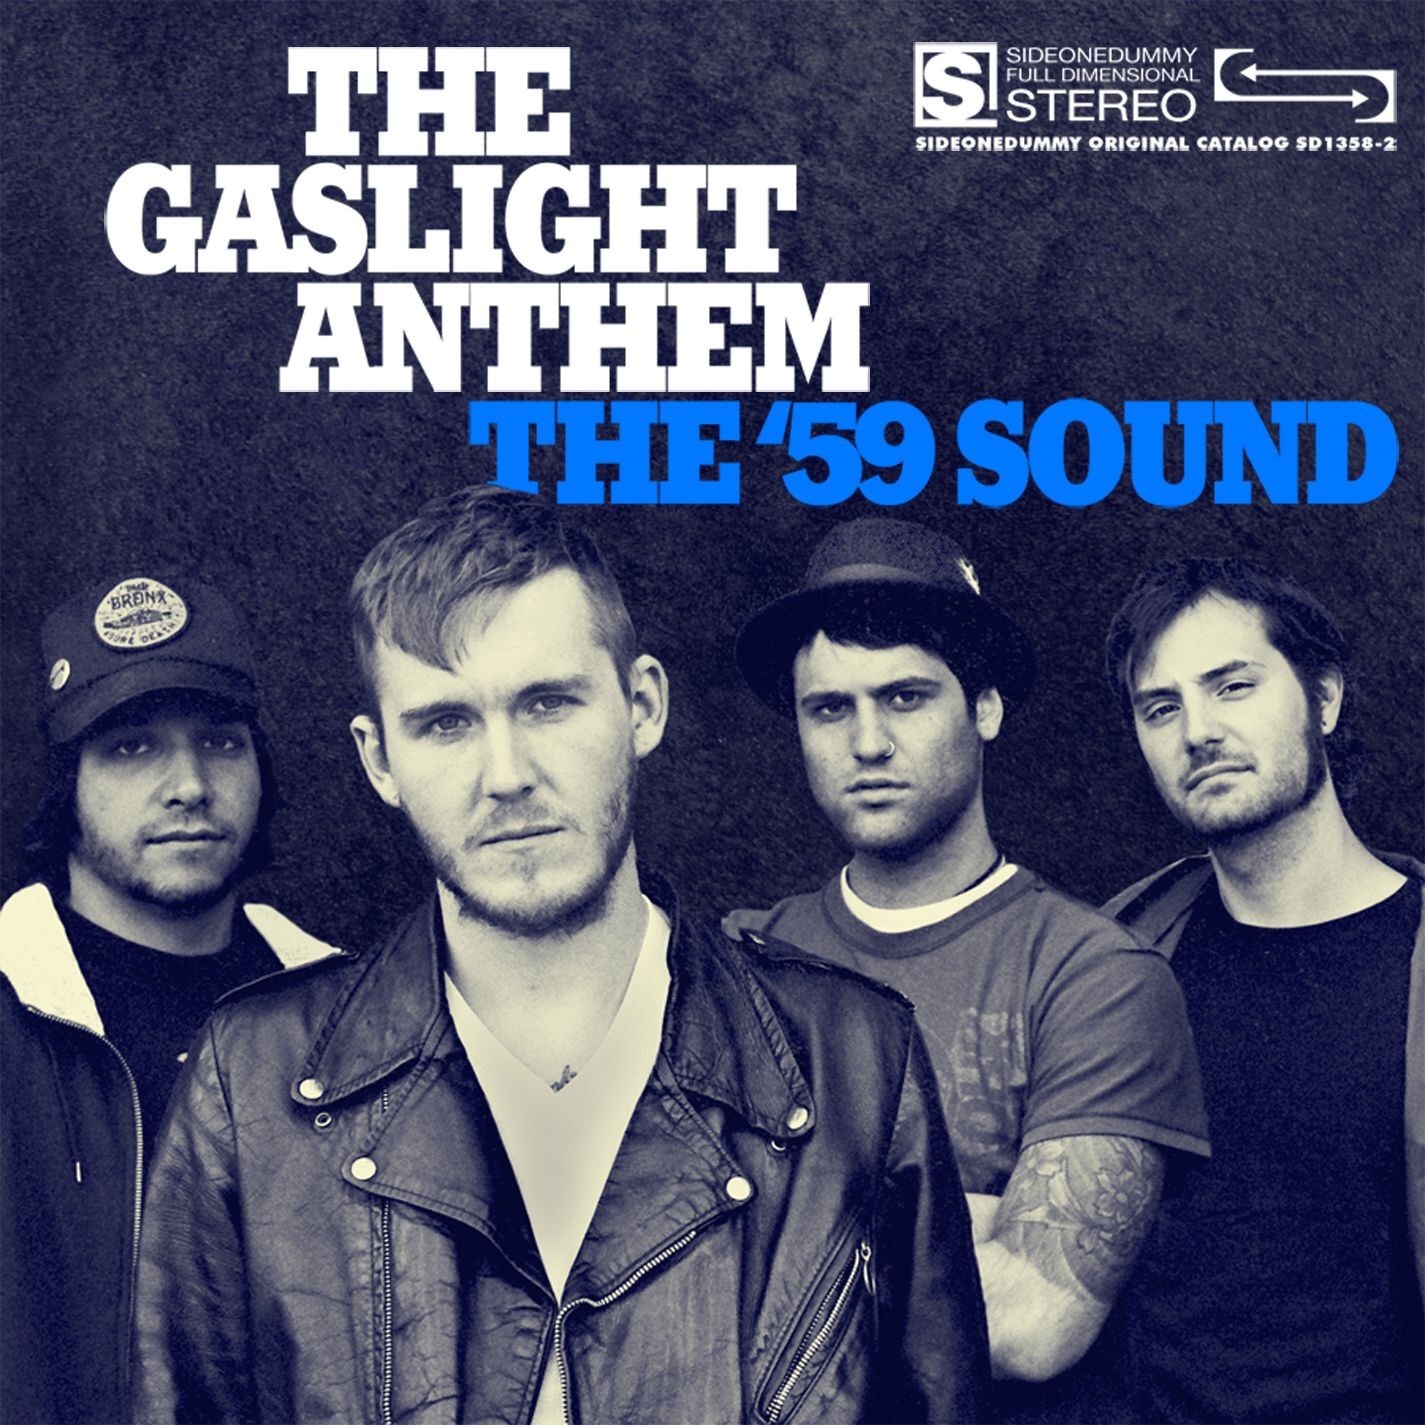 Show #100: The Gaslight Anthem’s The ’59 Sound